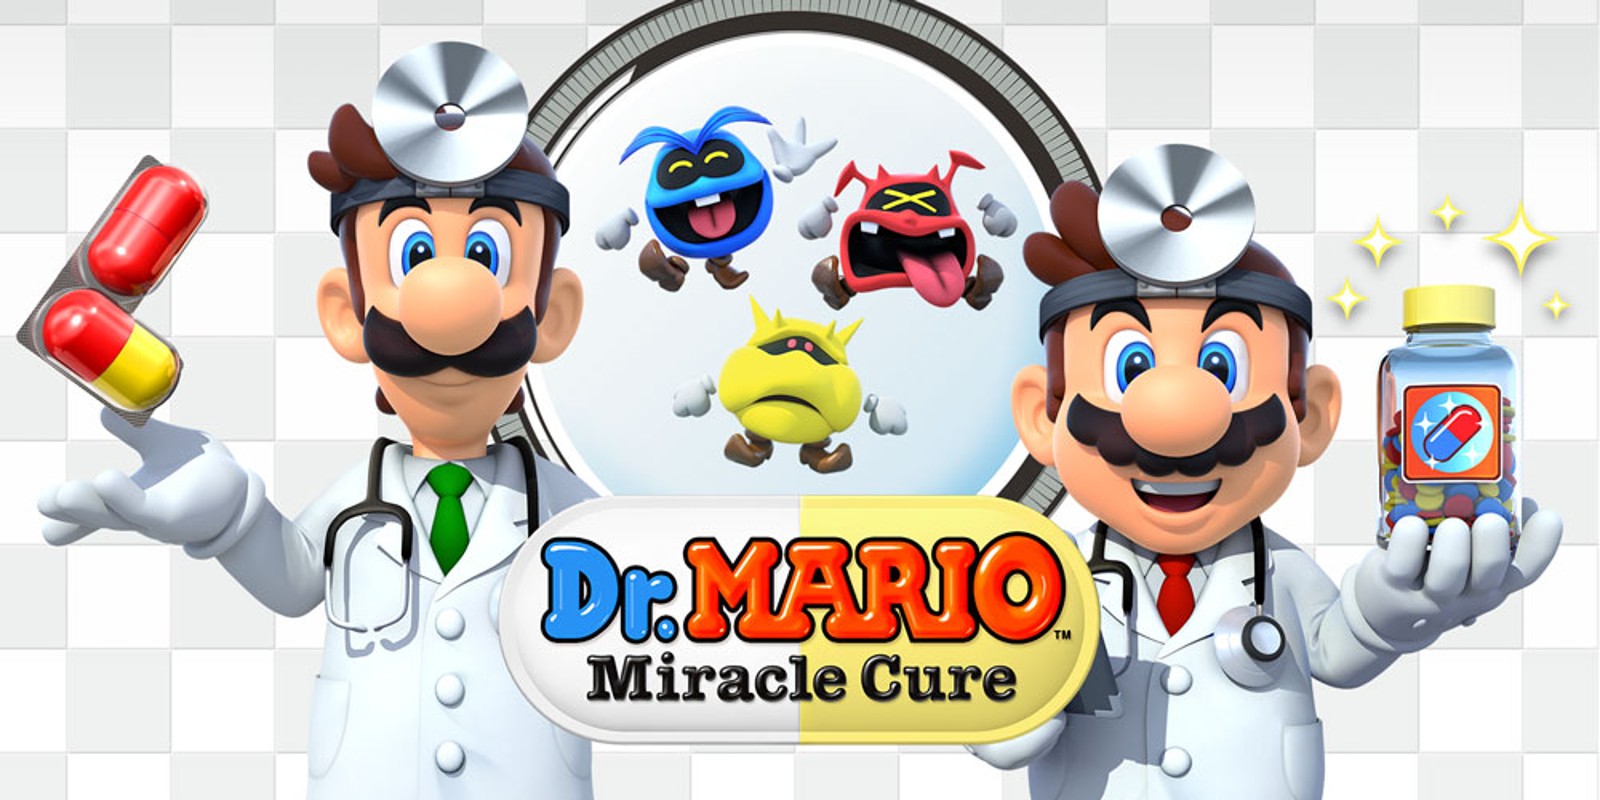 dr mario online multiplayer